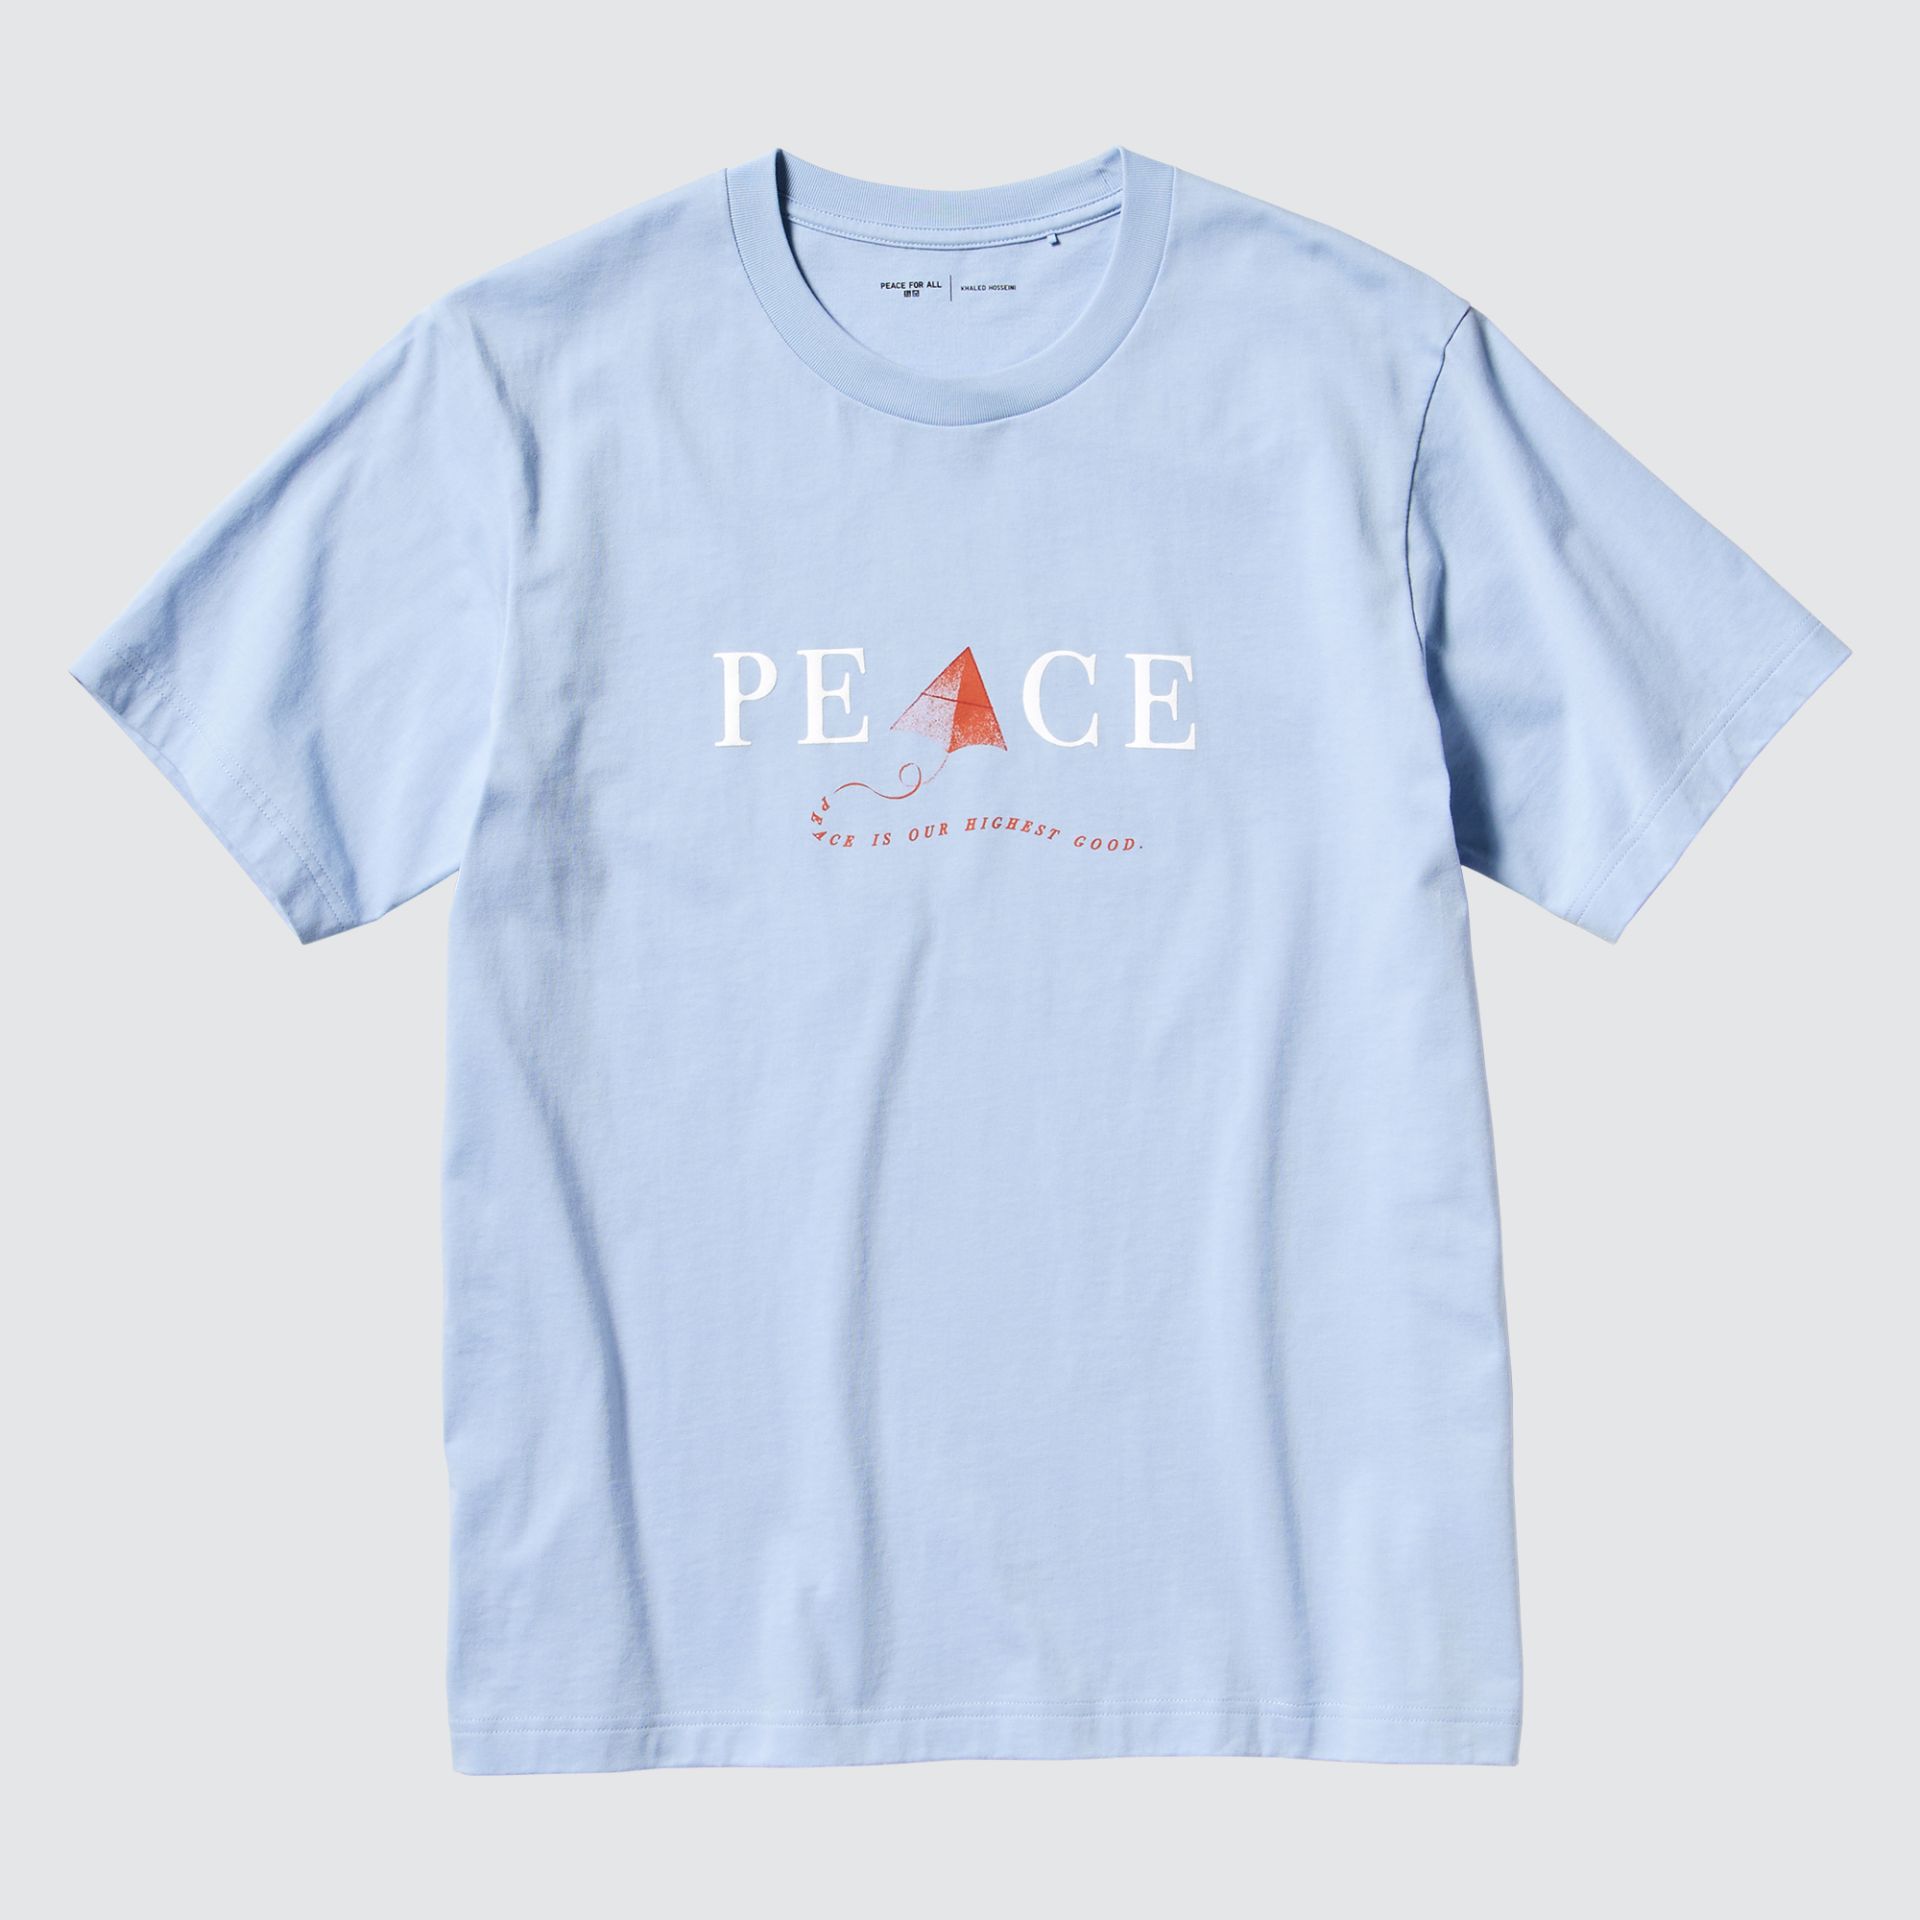 T-shirt Peace for All Uniqlo Hadirkan Lima Desain Baru yang Filosofis